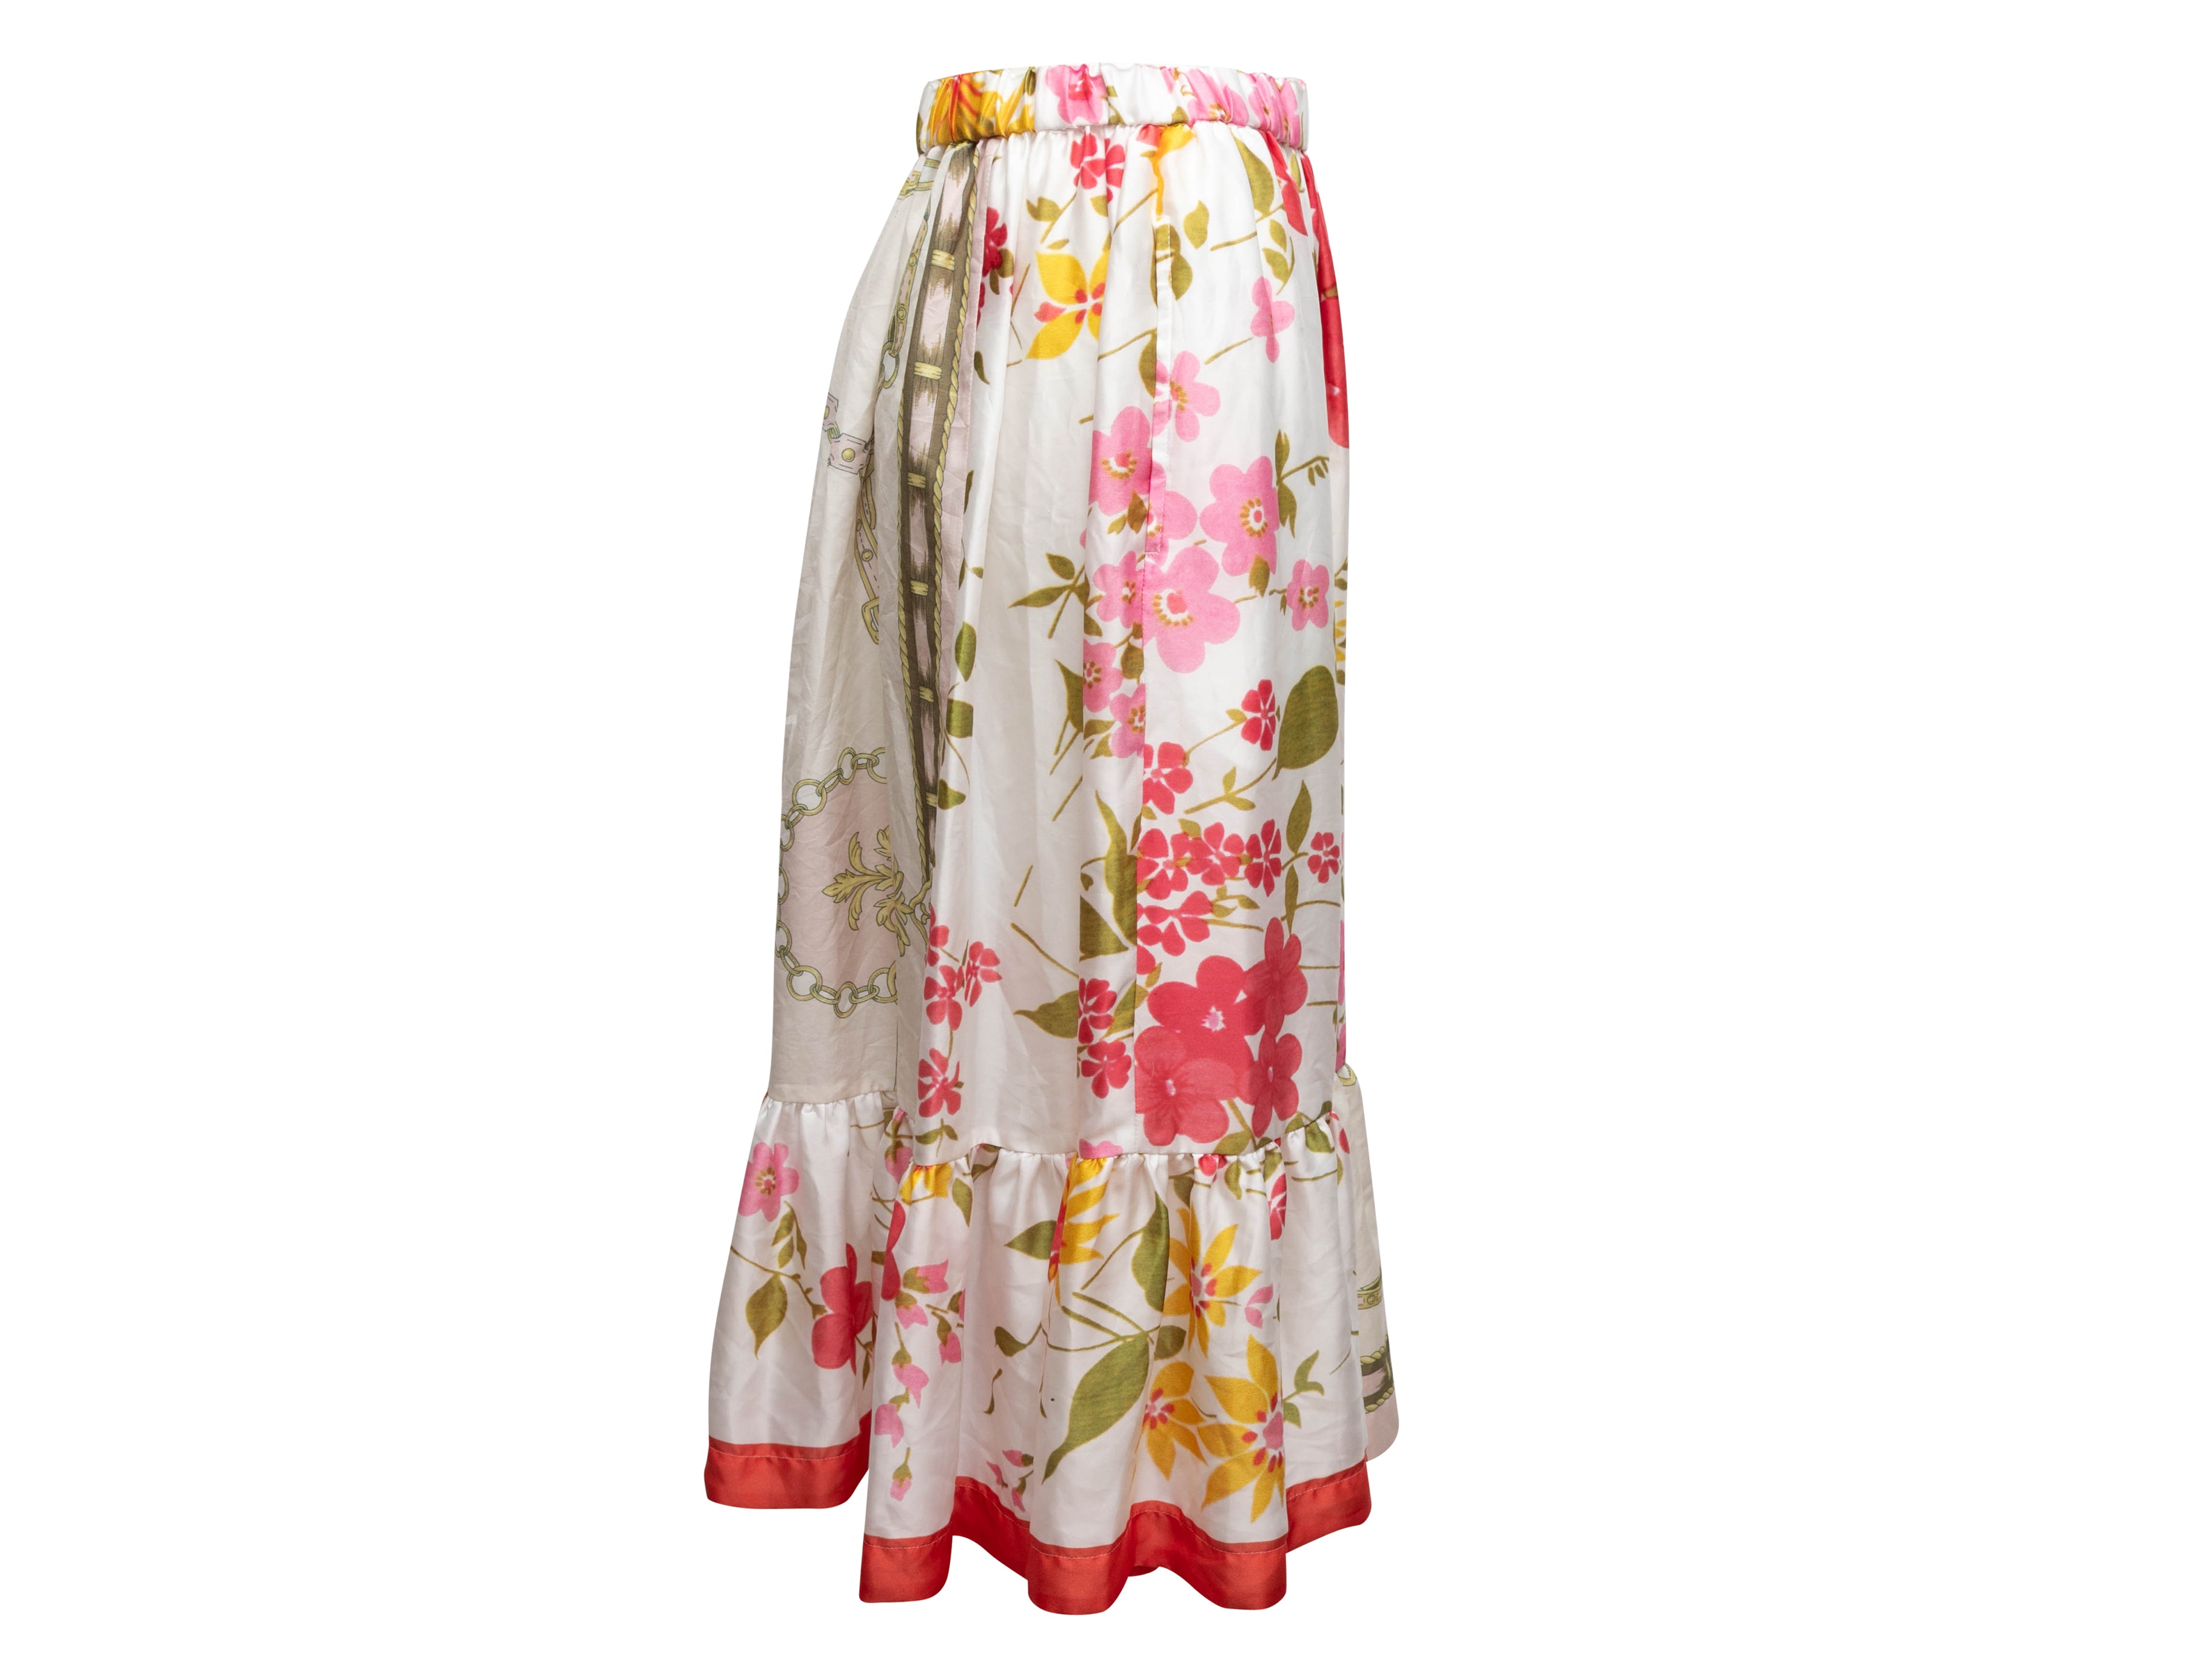 Multicolor Floral Print Skirt Size US M